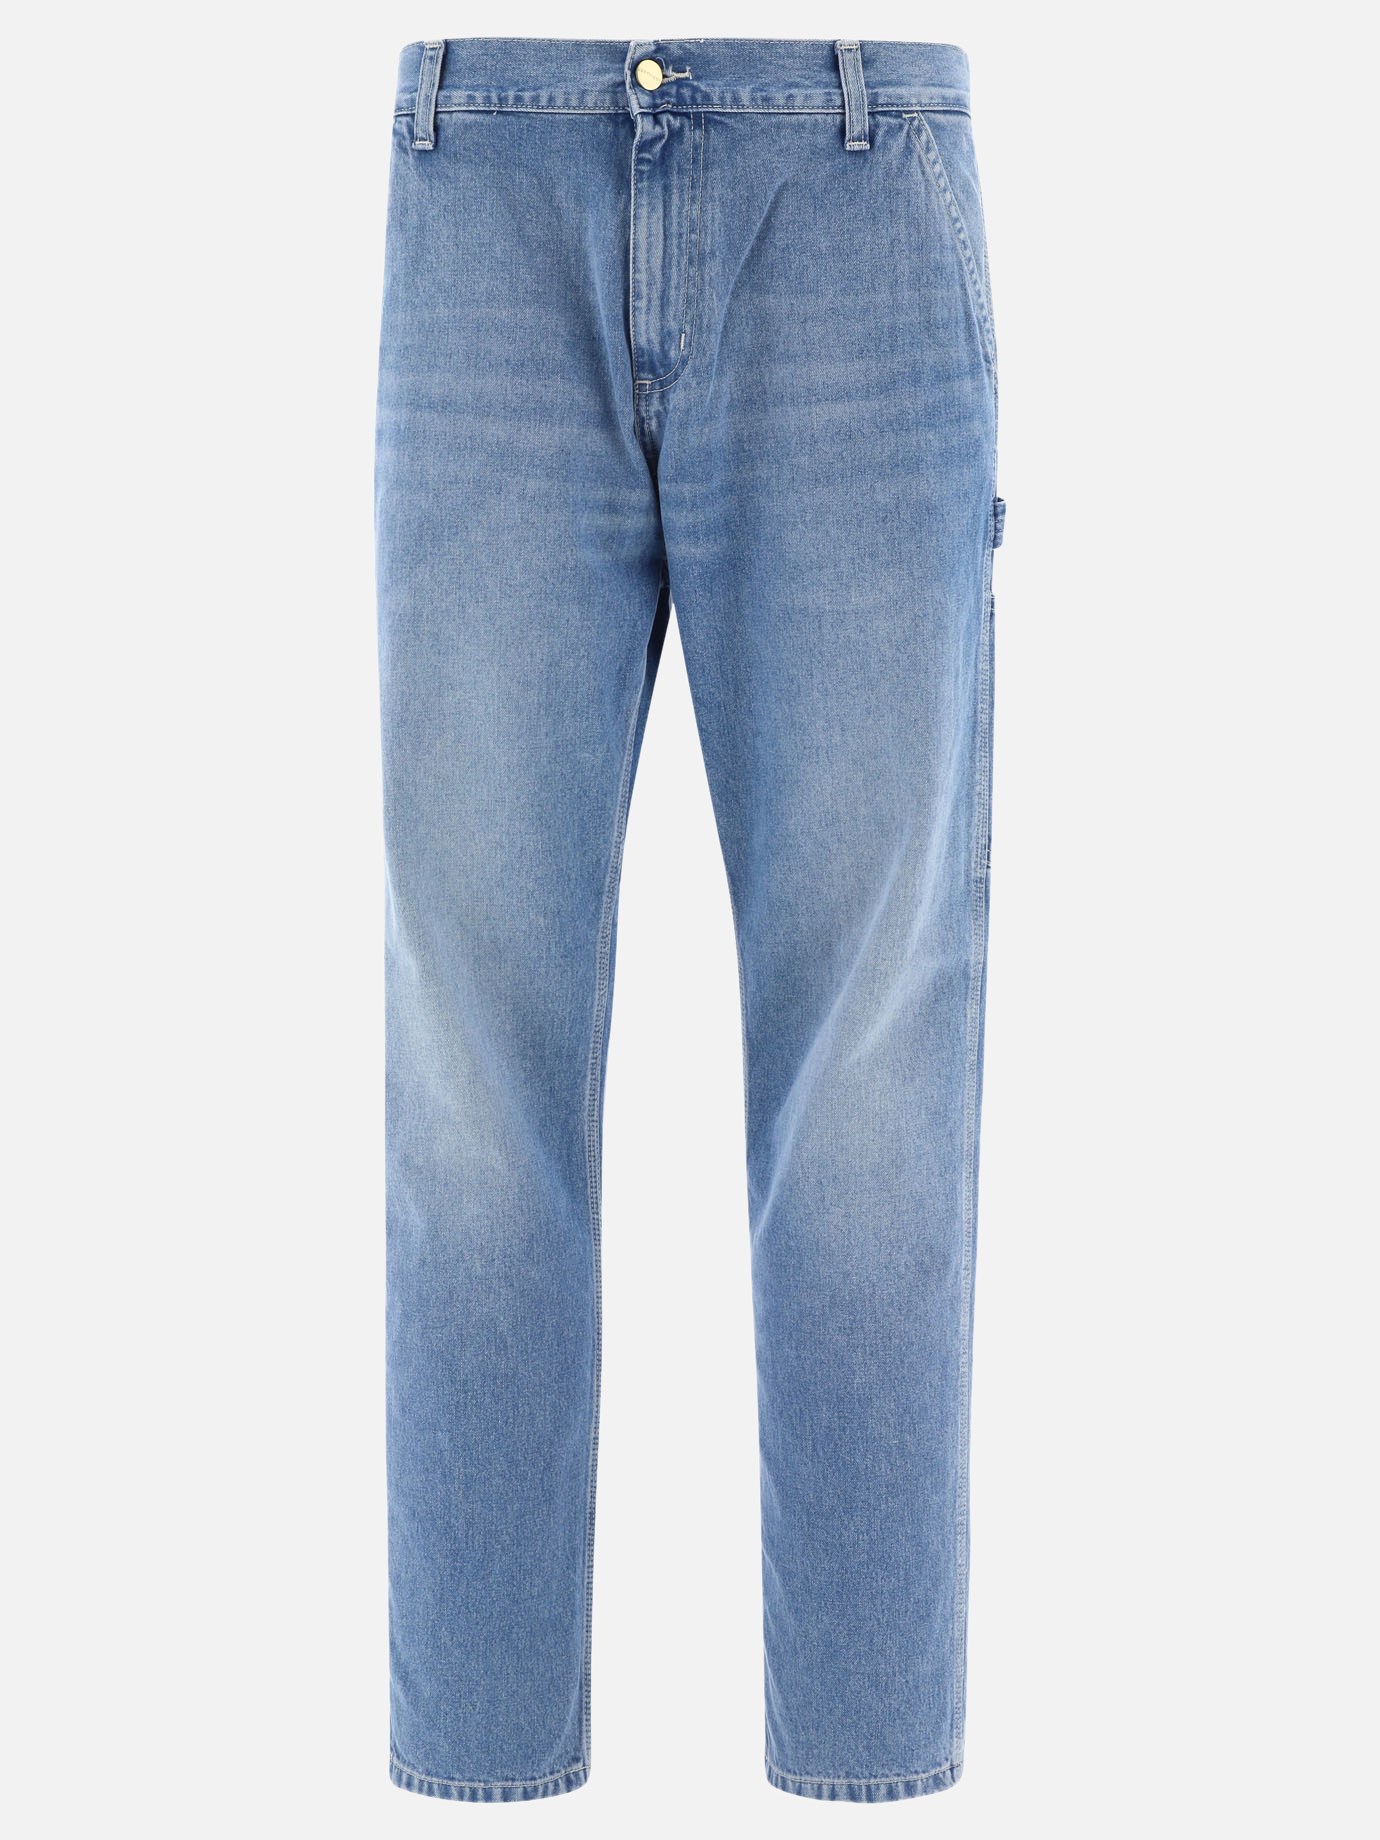 Jeans  Ruck Single Knee by Carhartt WIP - 4